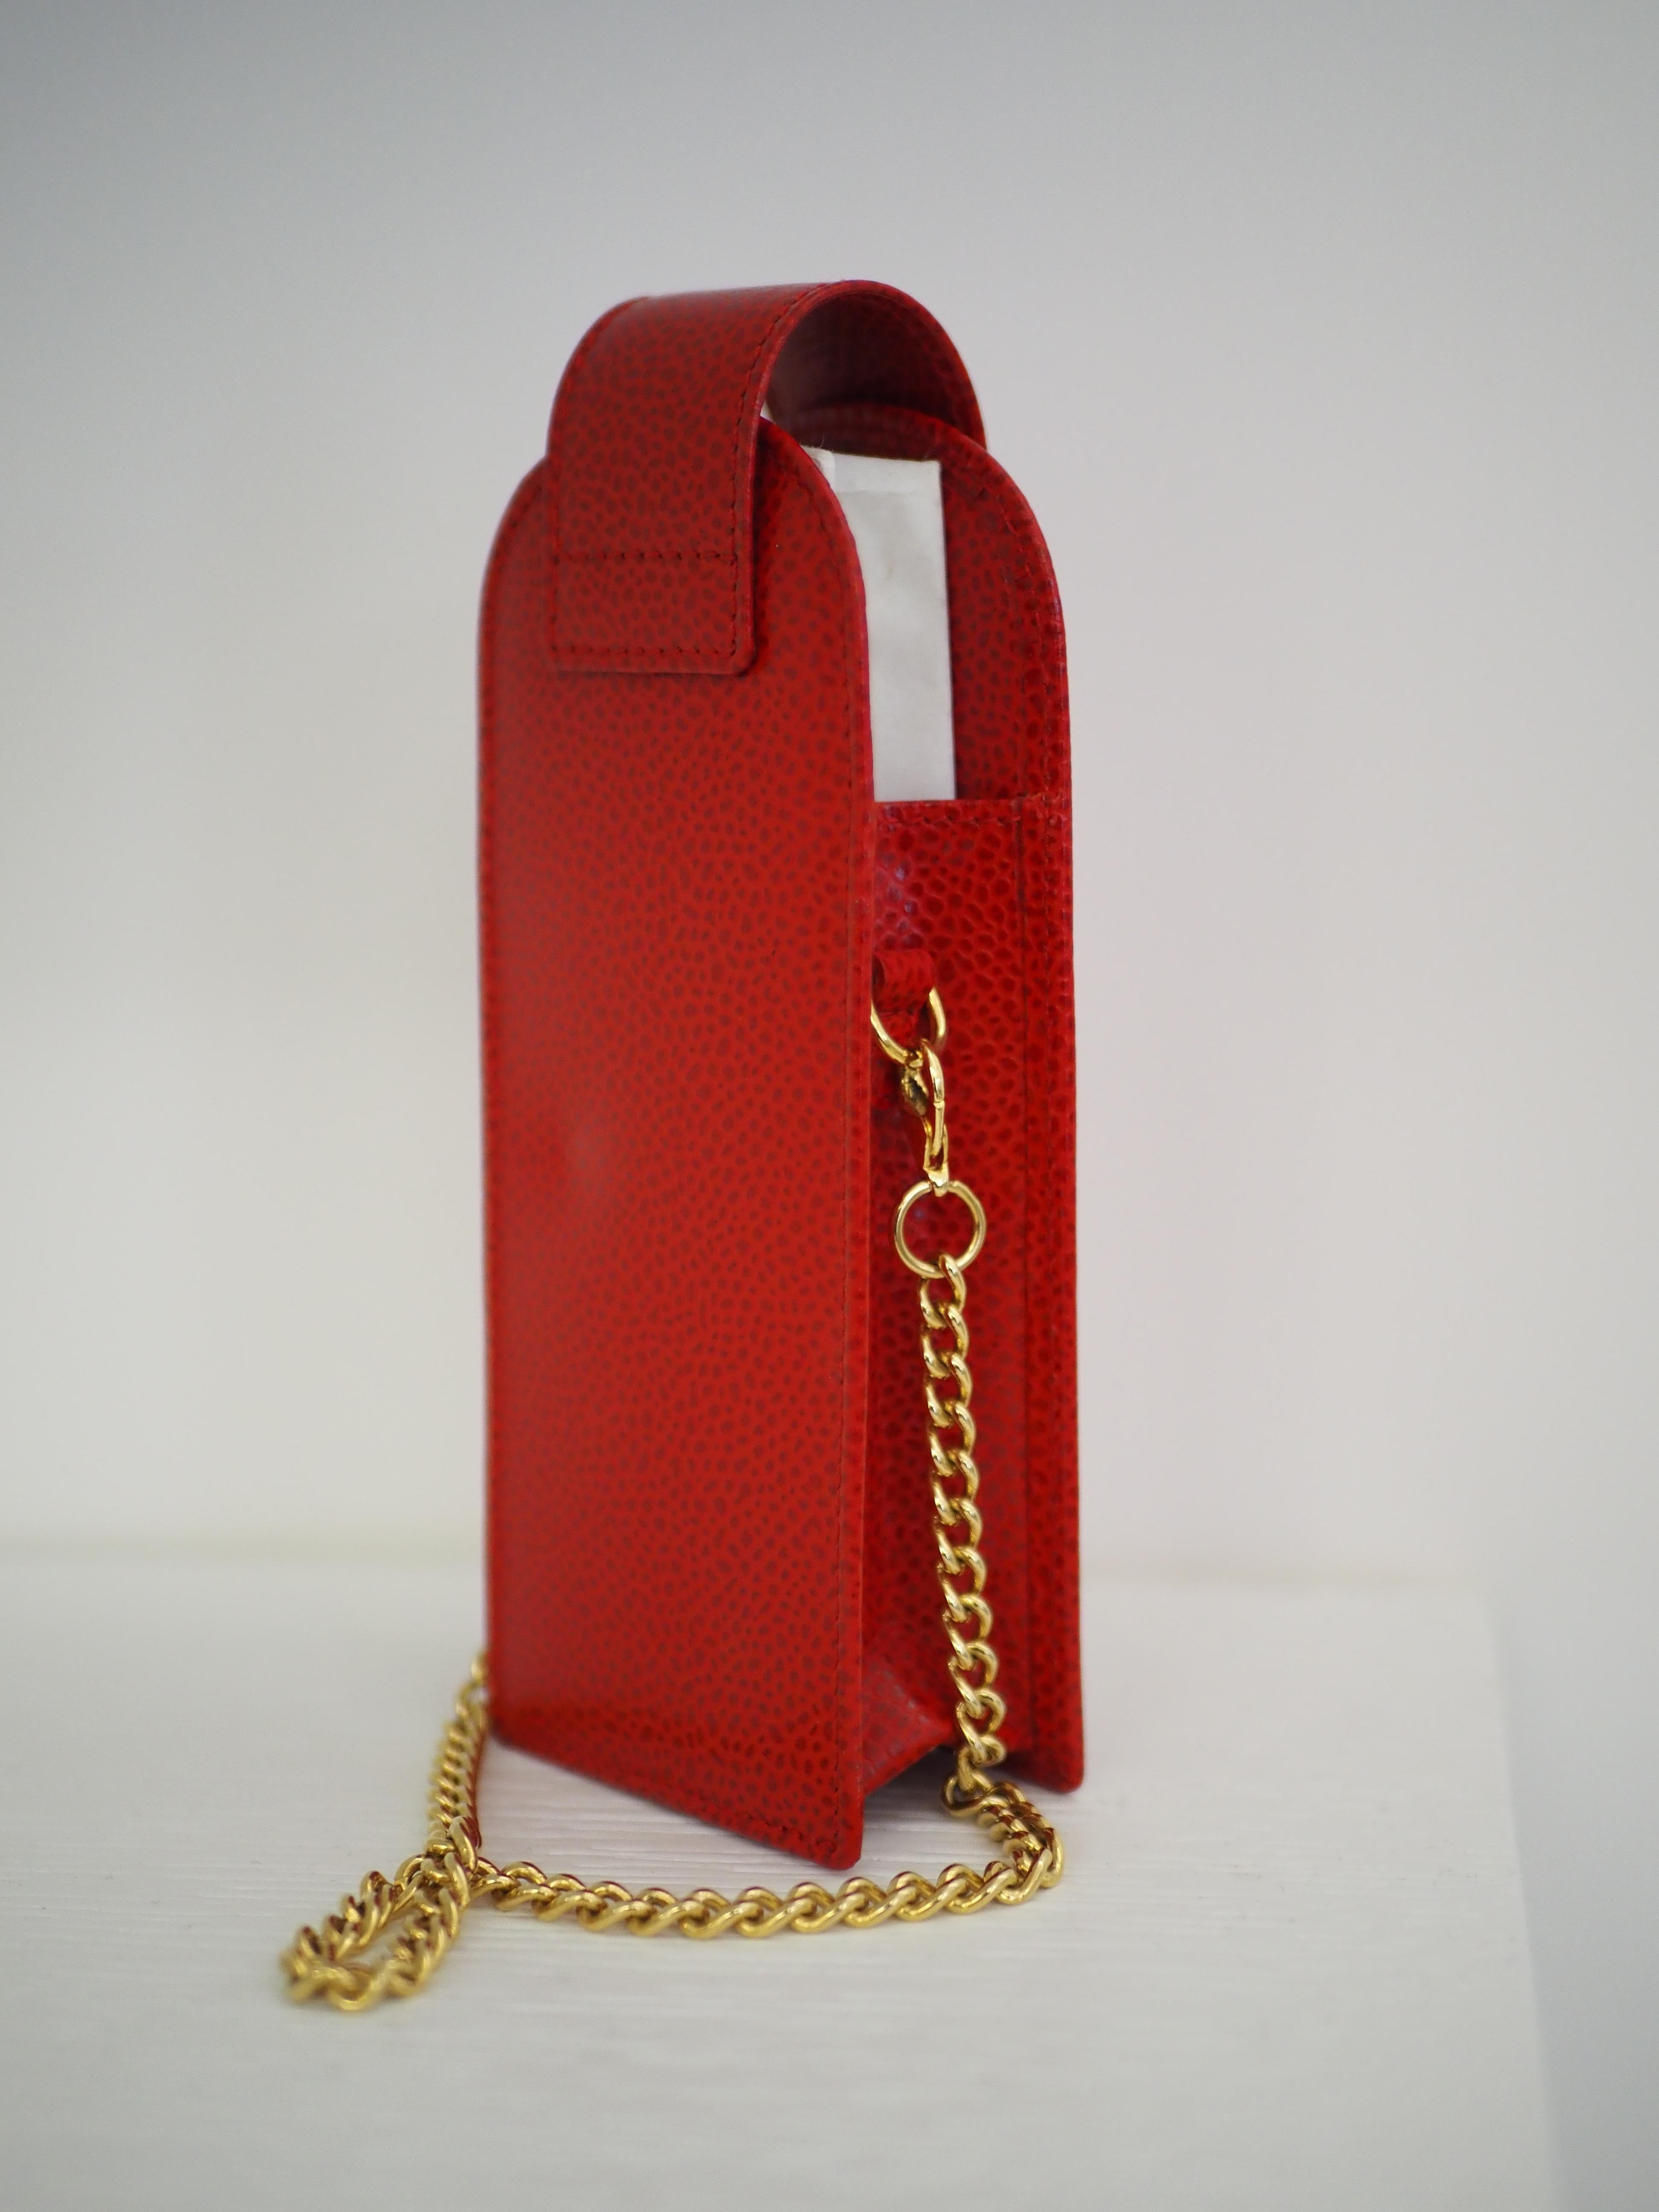 Nina Ricci red small shoulder bag handbag For Sale 4